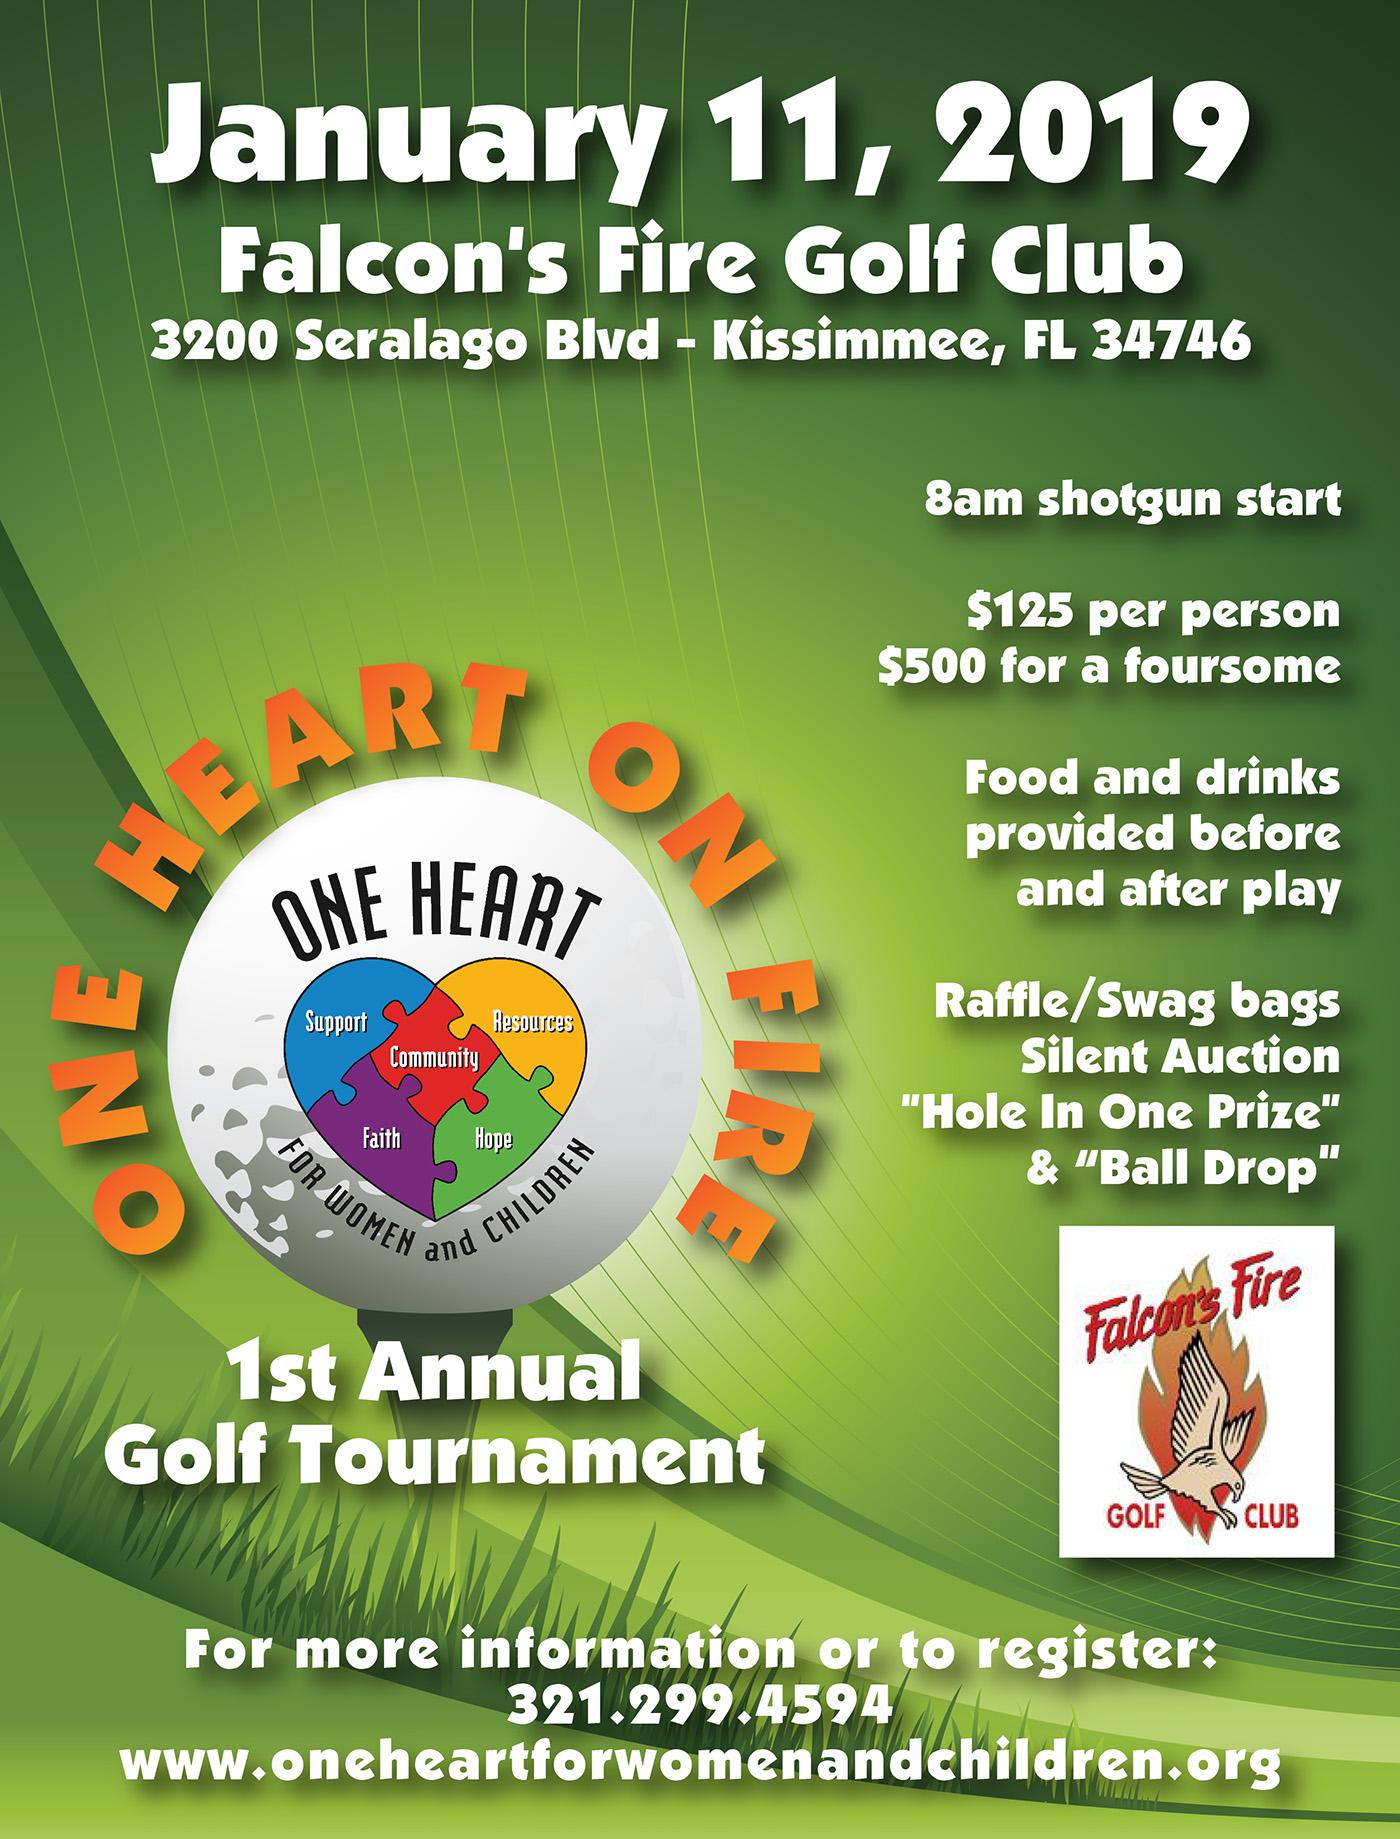 One Heart on Fire 1st Annual Golf Tounament